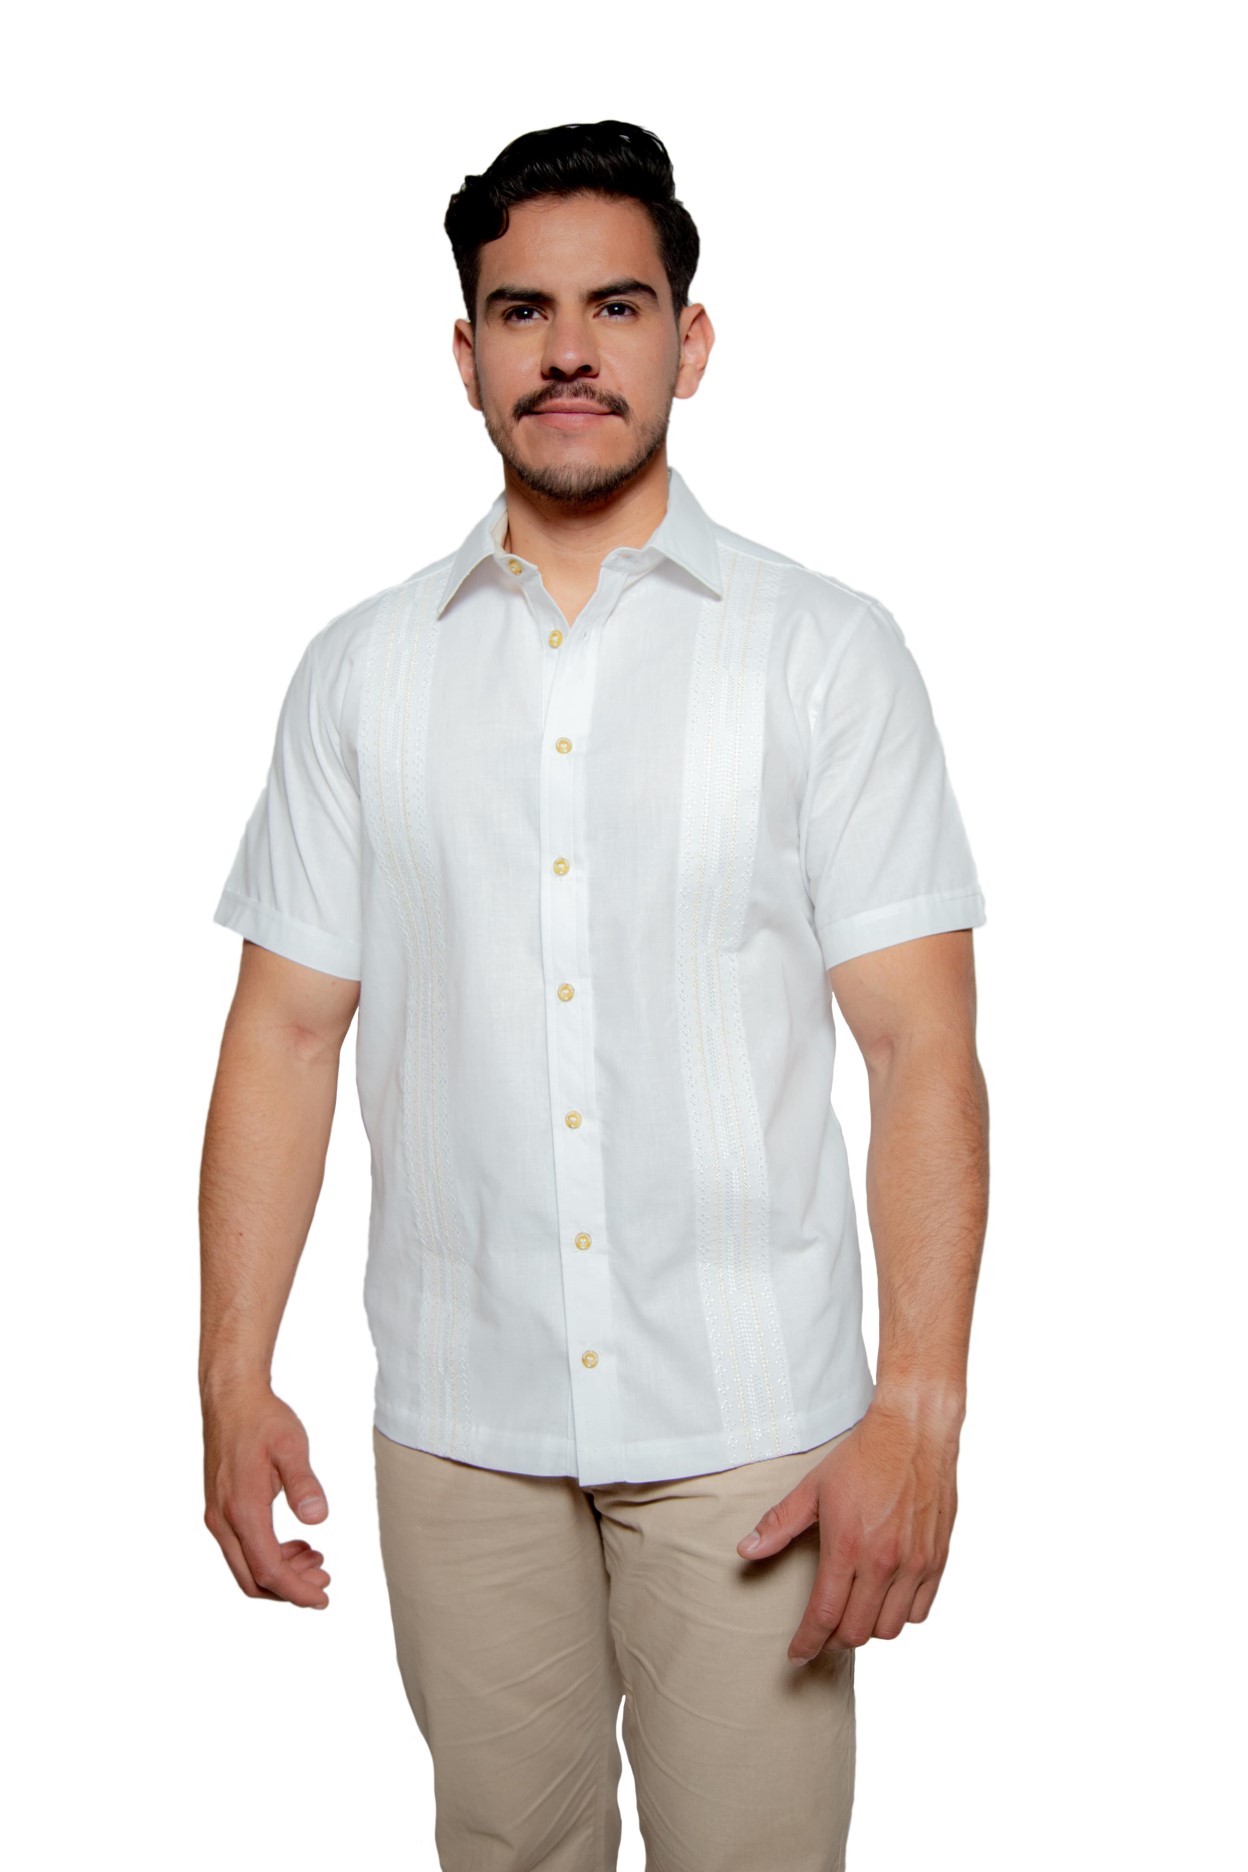 Guayabera blanca casual manga corta cuello bordado - Antonio Limón